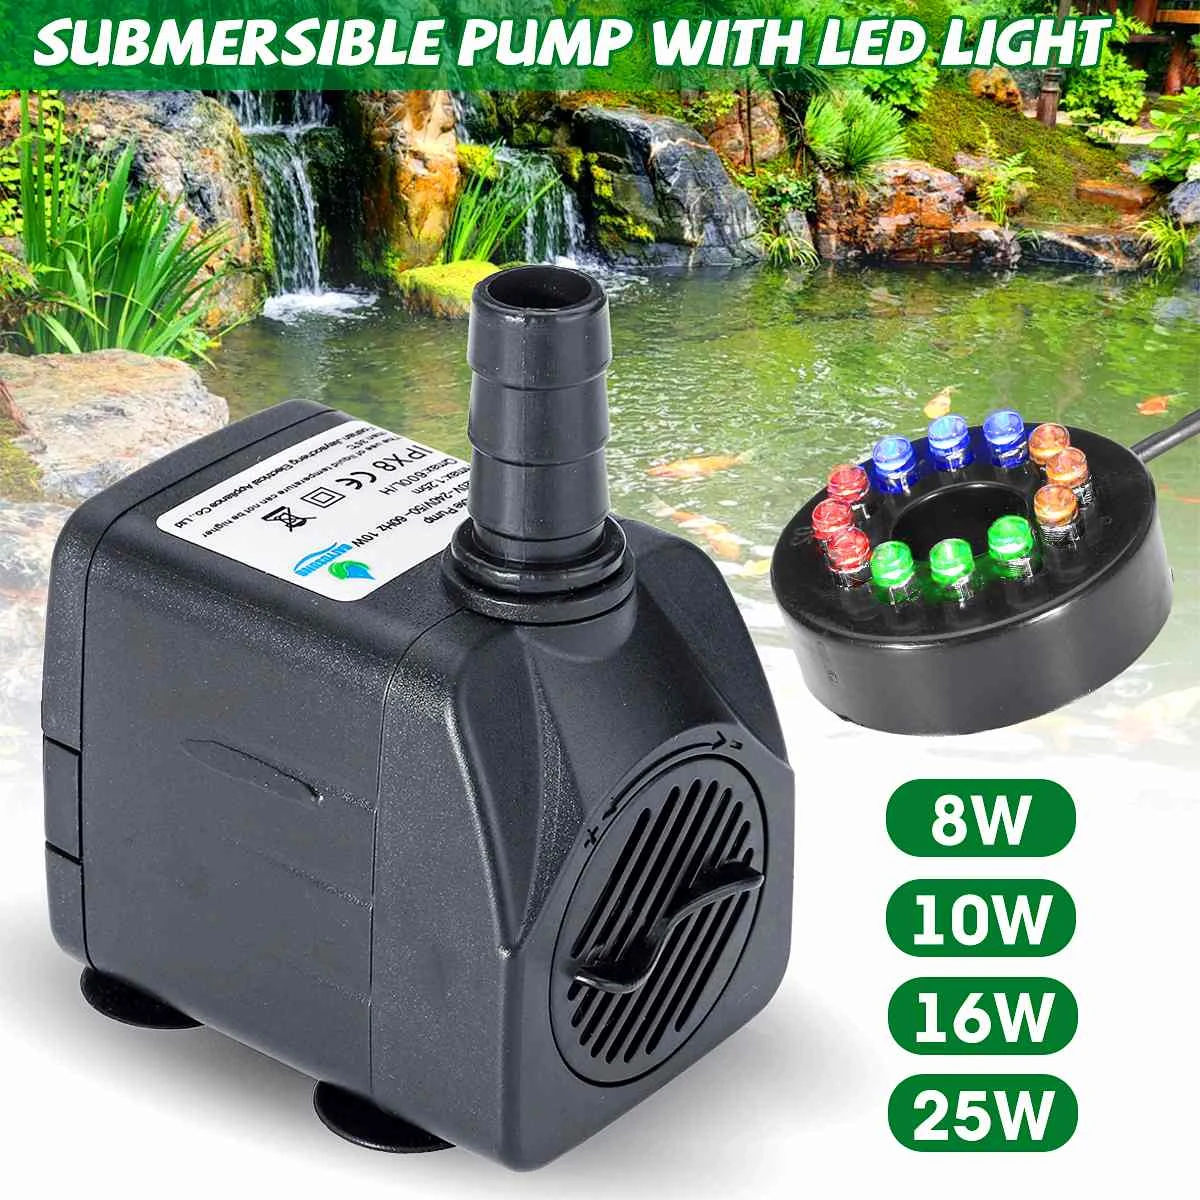 Submersible water pump for indoor plants